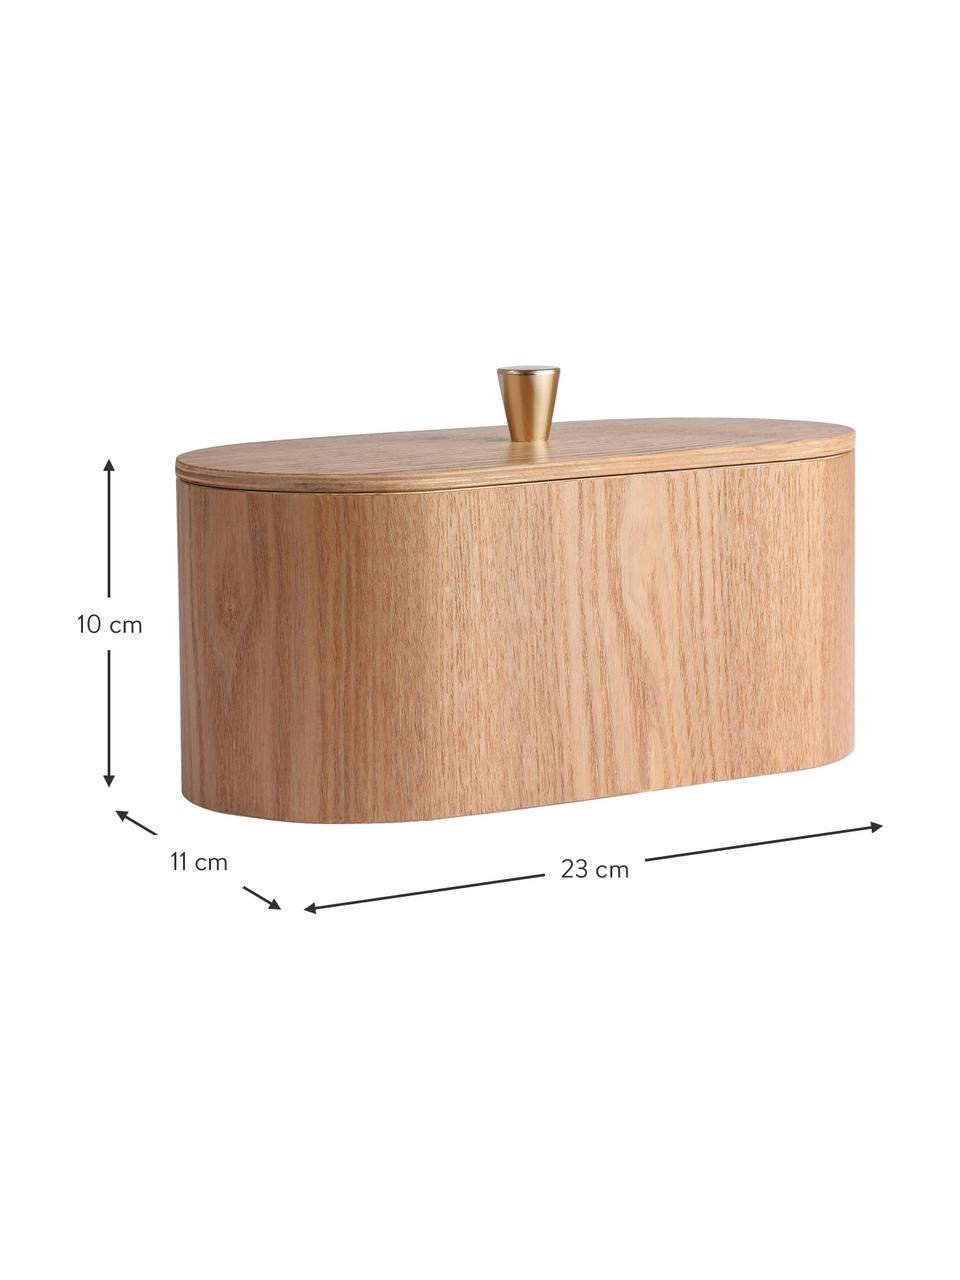 Holz-Aufbewahrungsbox Willow, Box: Weidenholz, Griff: Messing, Braun, Messing, B 23 x H 10 cm